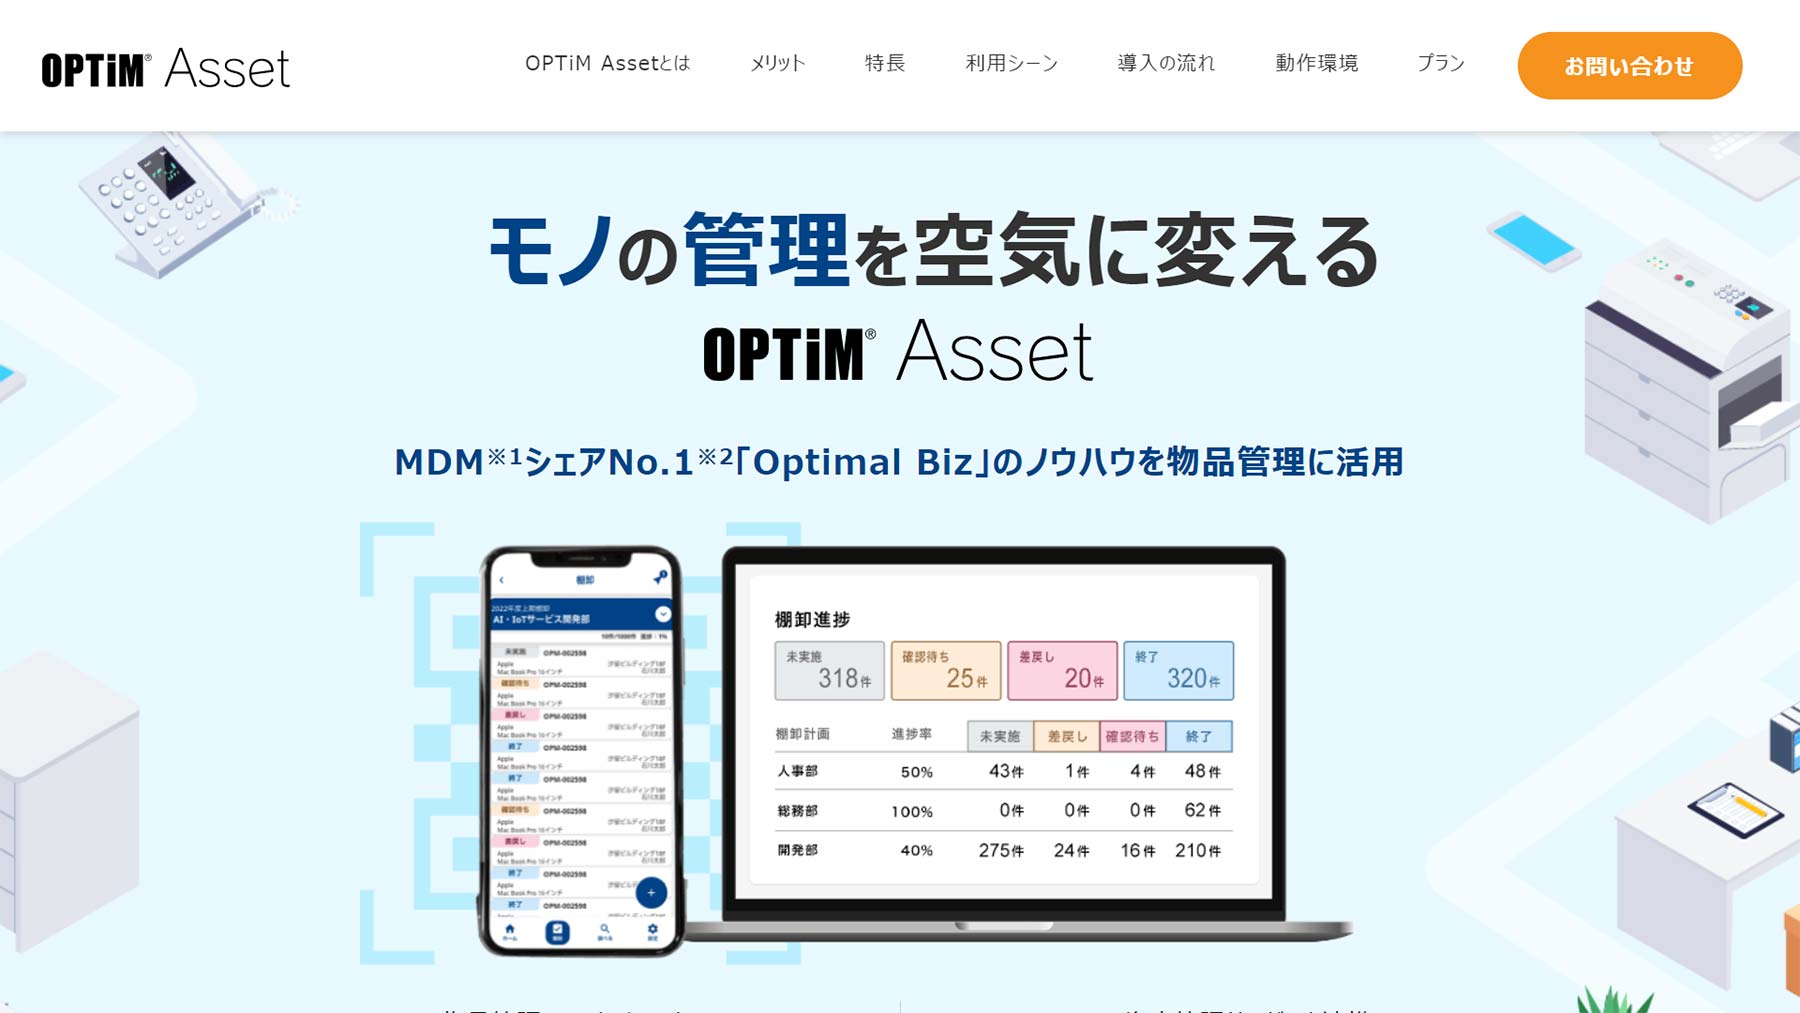 OPTiM Asset公式Webサイト